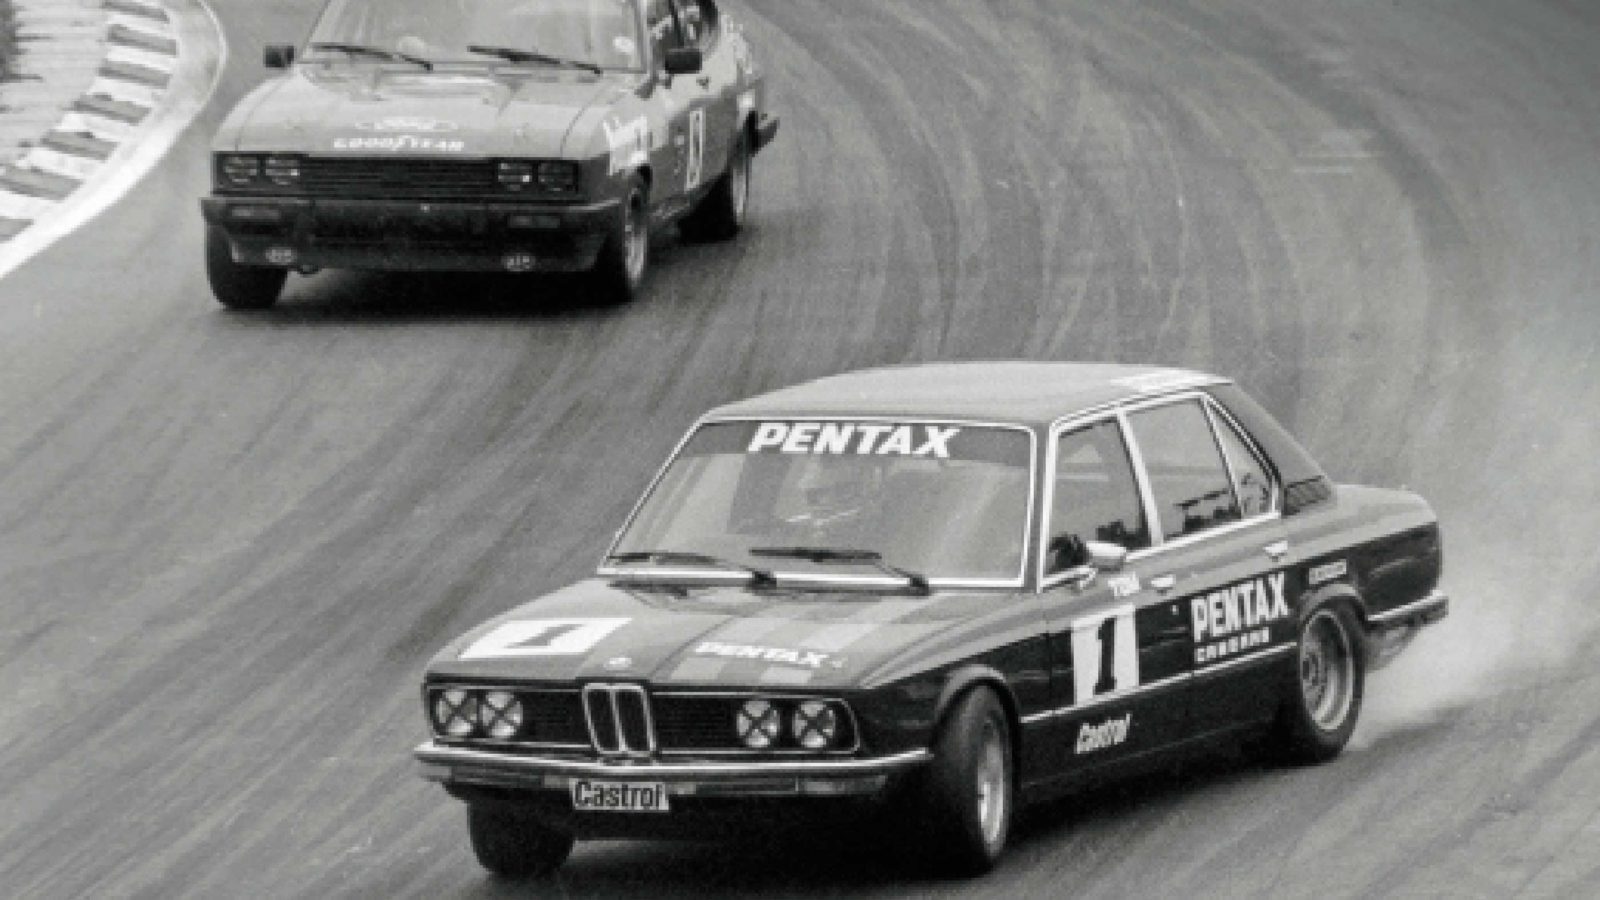 BMW at Brands Hatch in 1978